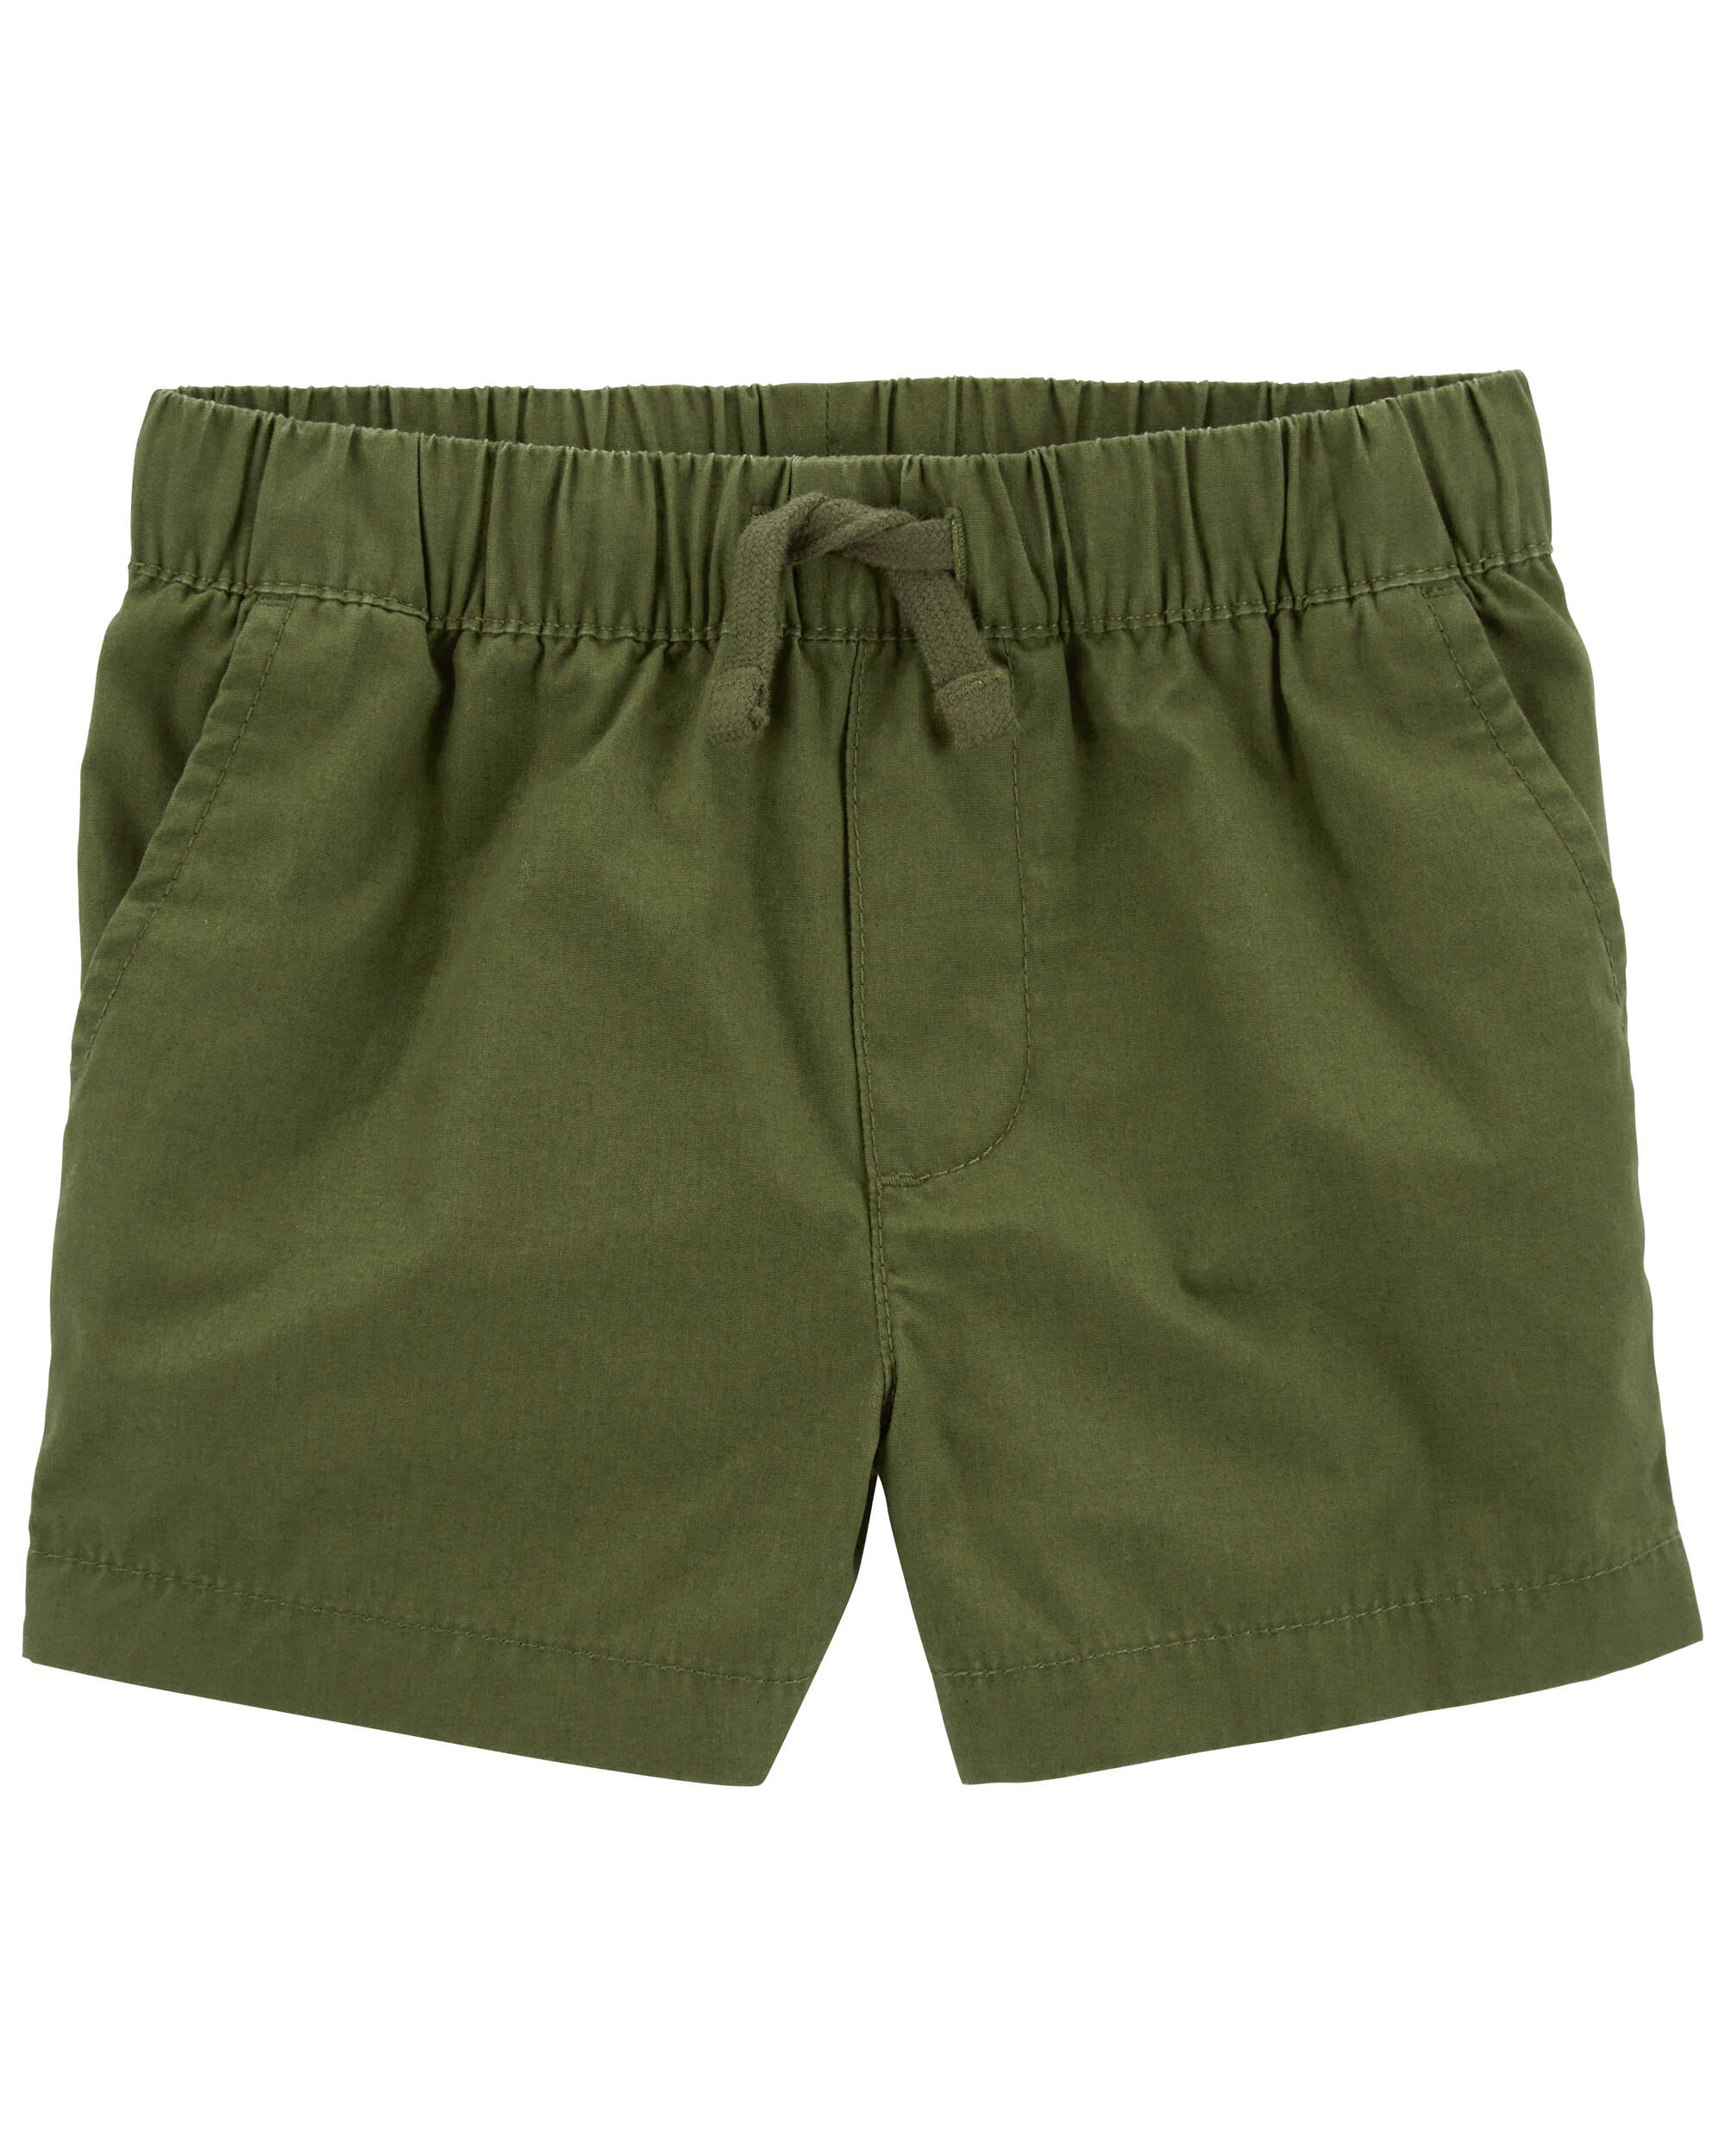 Twill shorts - Light khaki green - Kids